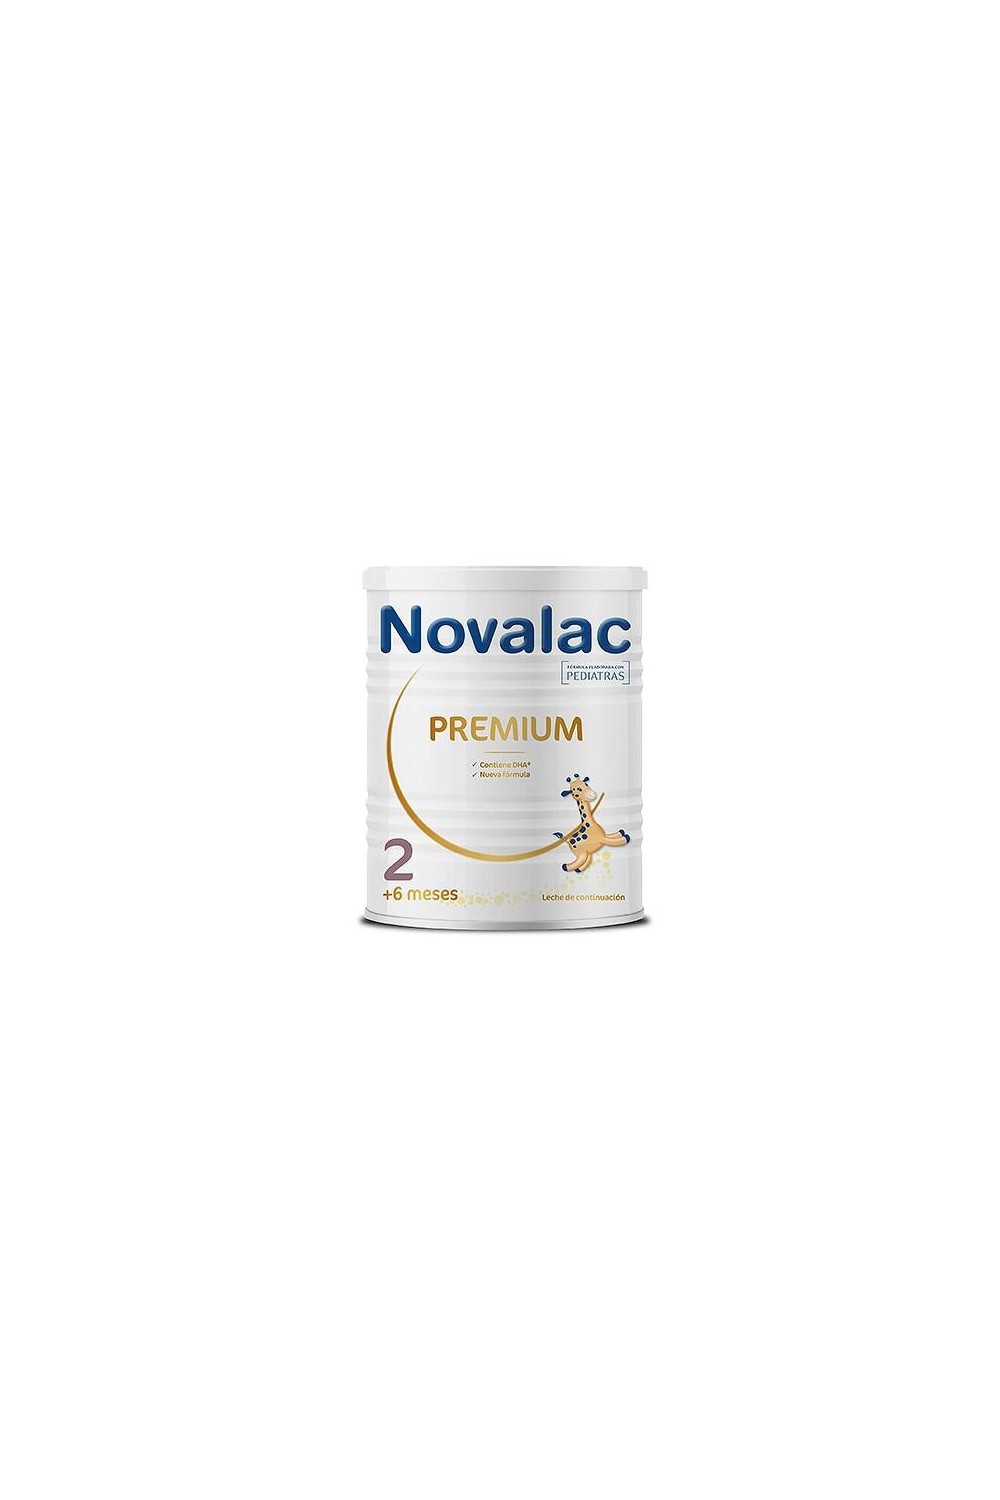 Novalac Premium 2 6 Months 800g